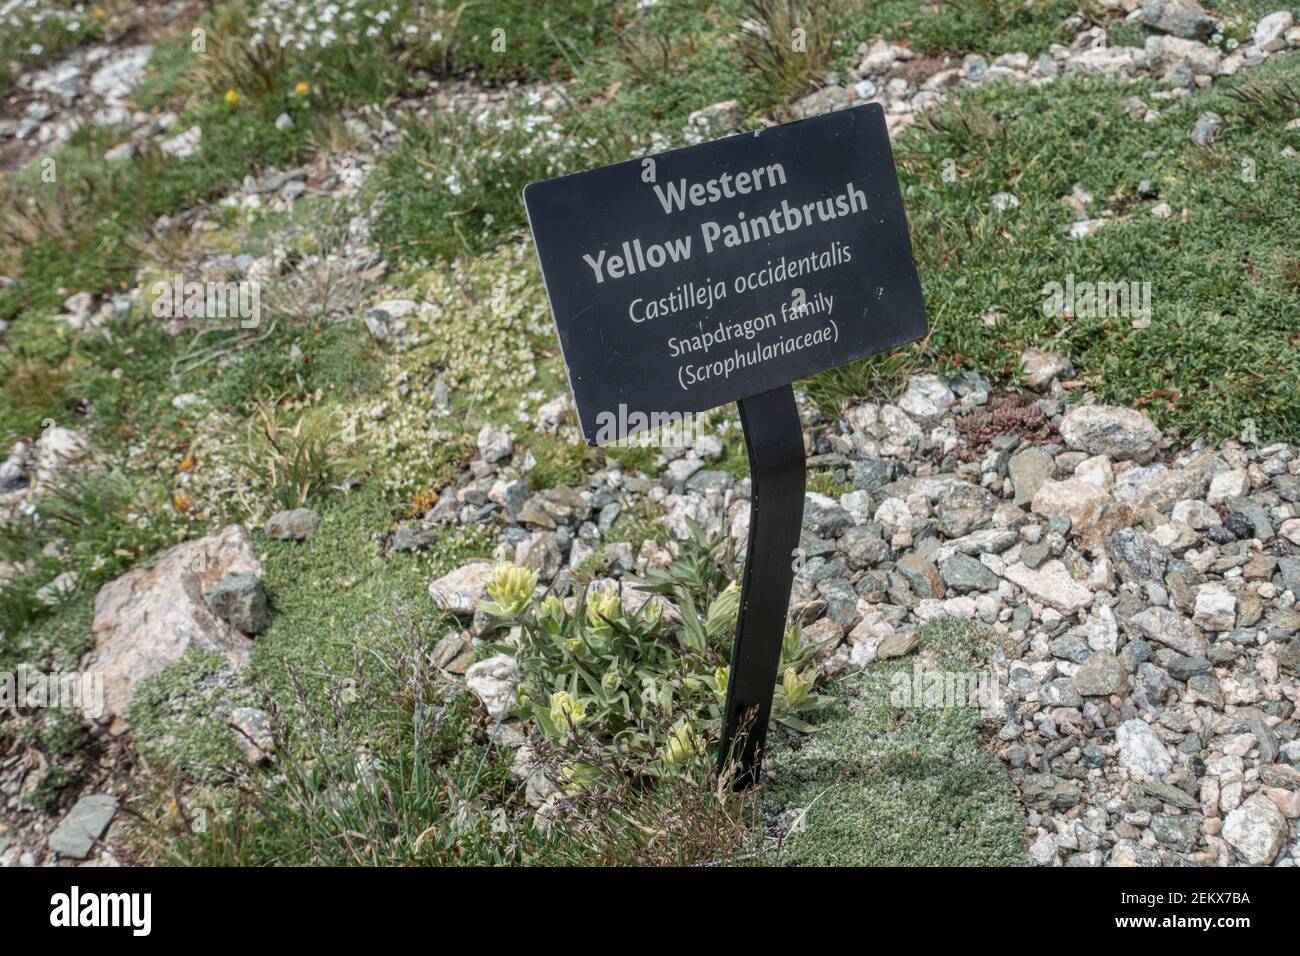 Western Yellow Paintbrush botanical sign, Rocky Mountain National Park, Colorado, USA Stock Photo